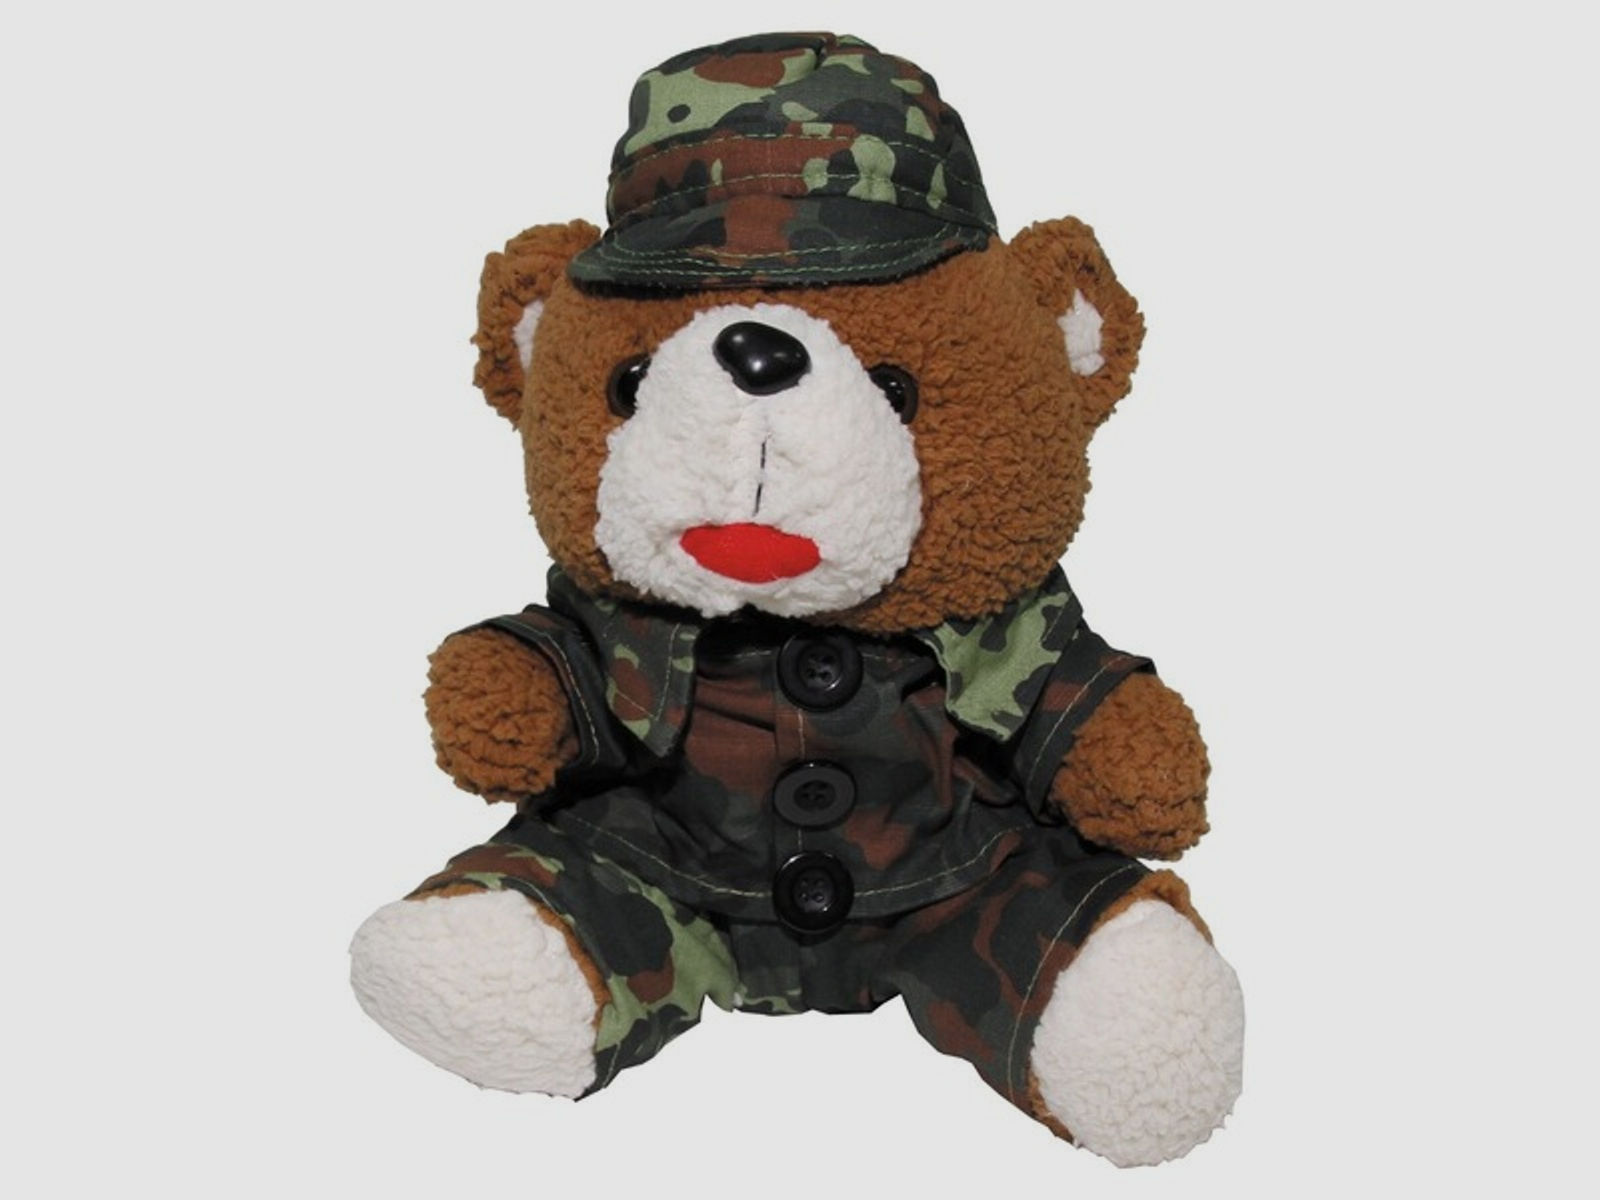 Teddybär mit Bundeswehr Anzug / Uniform + Mütze in BW Flecktarn / Punkttarn - ca. 28 cm hoch